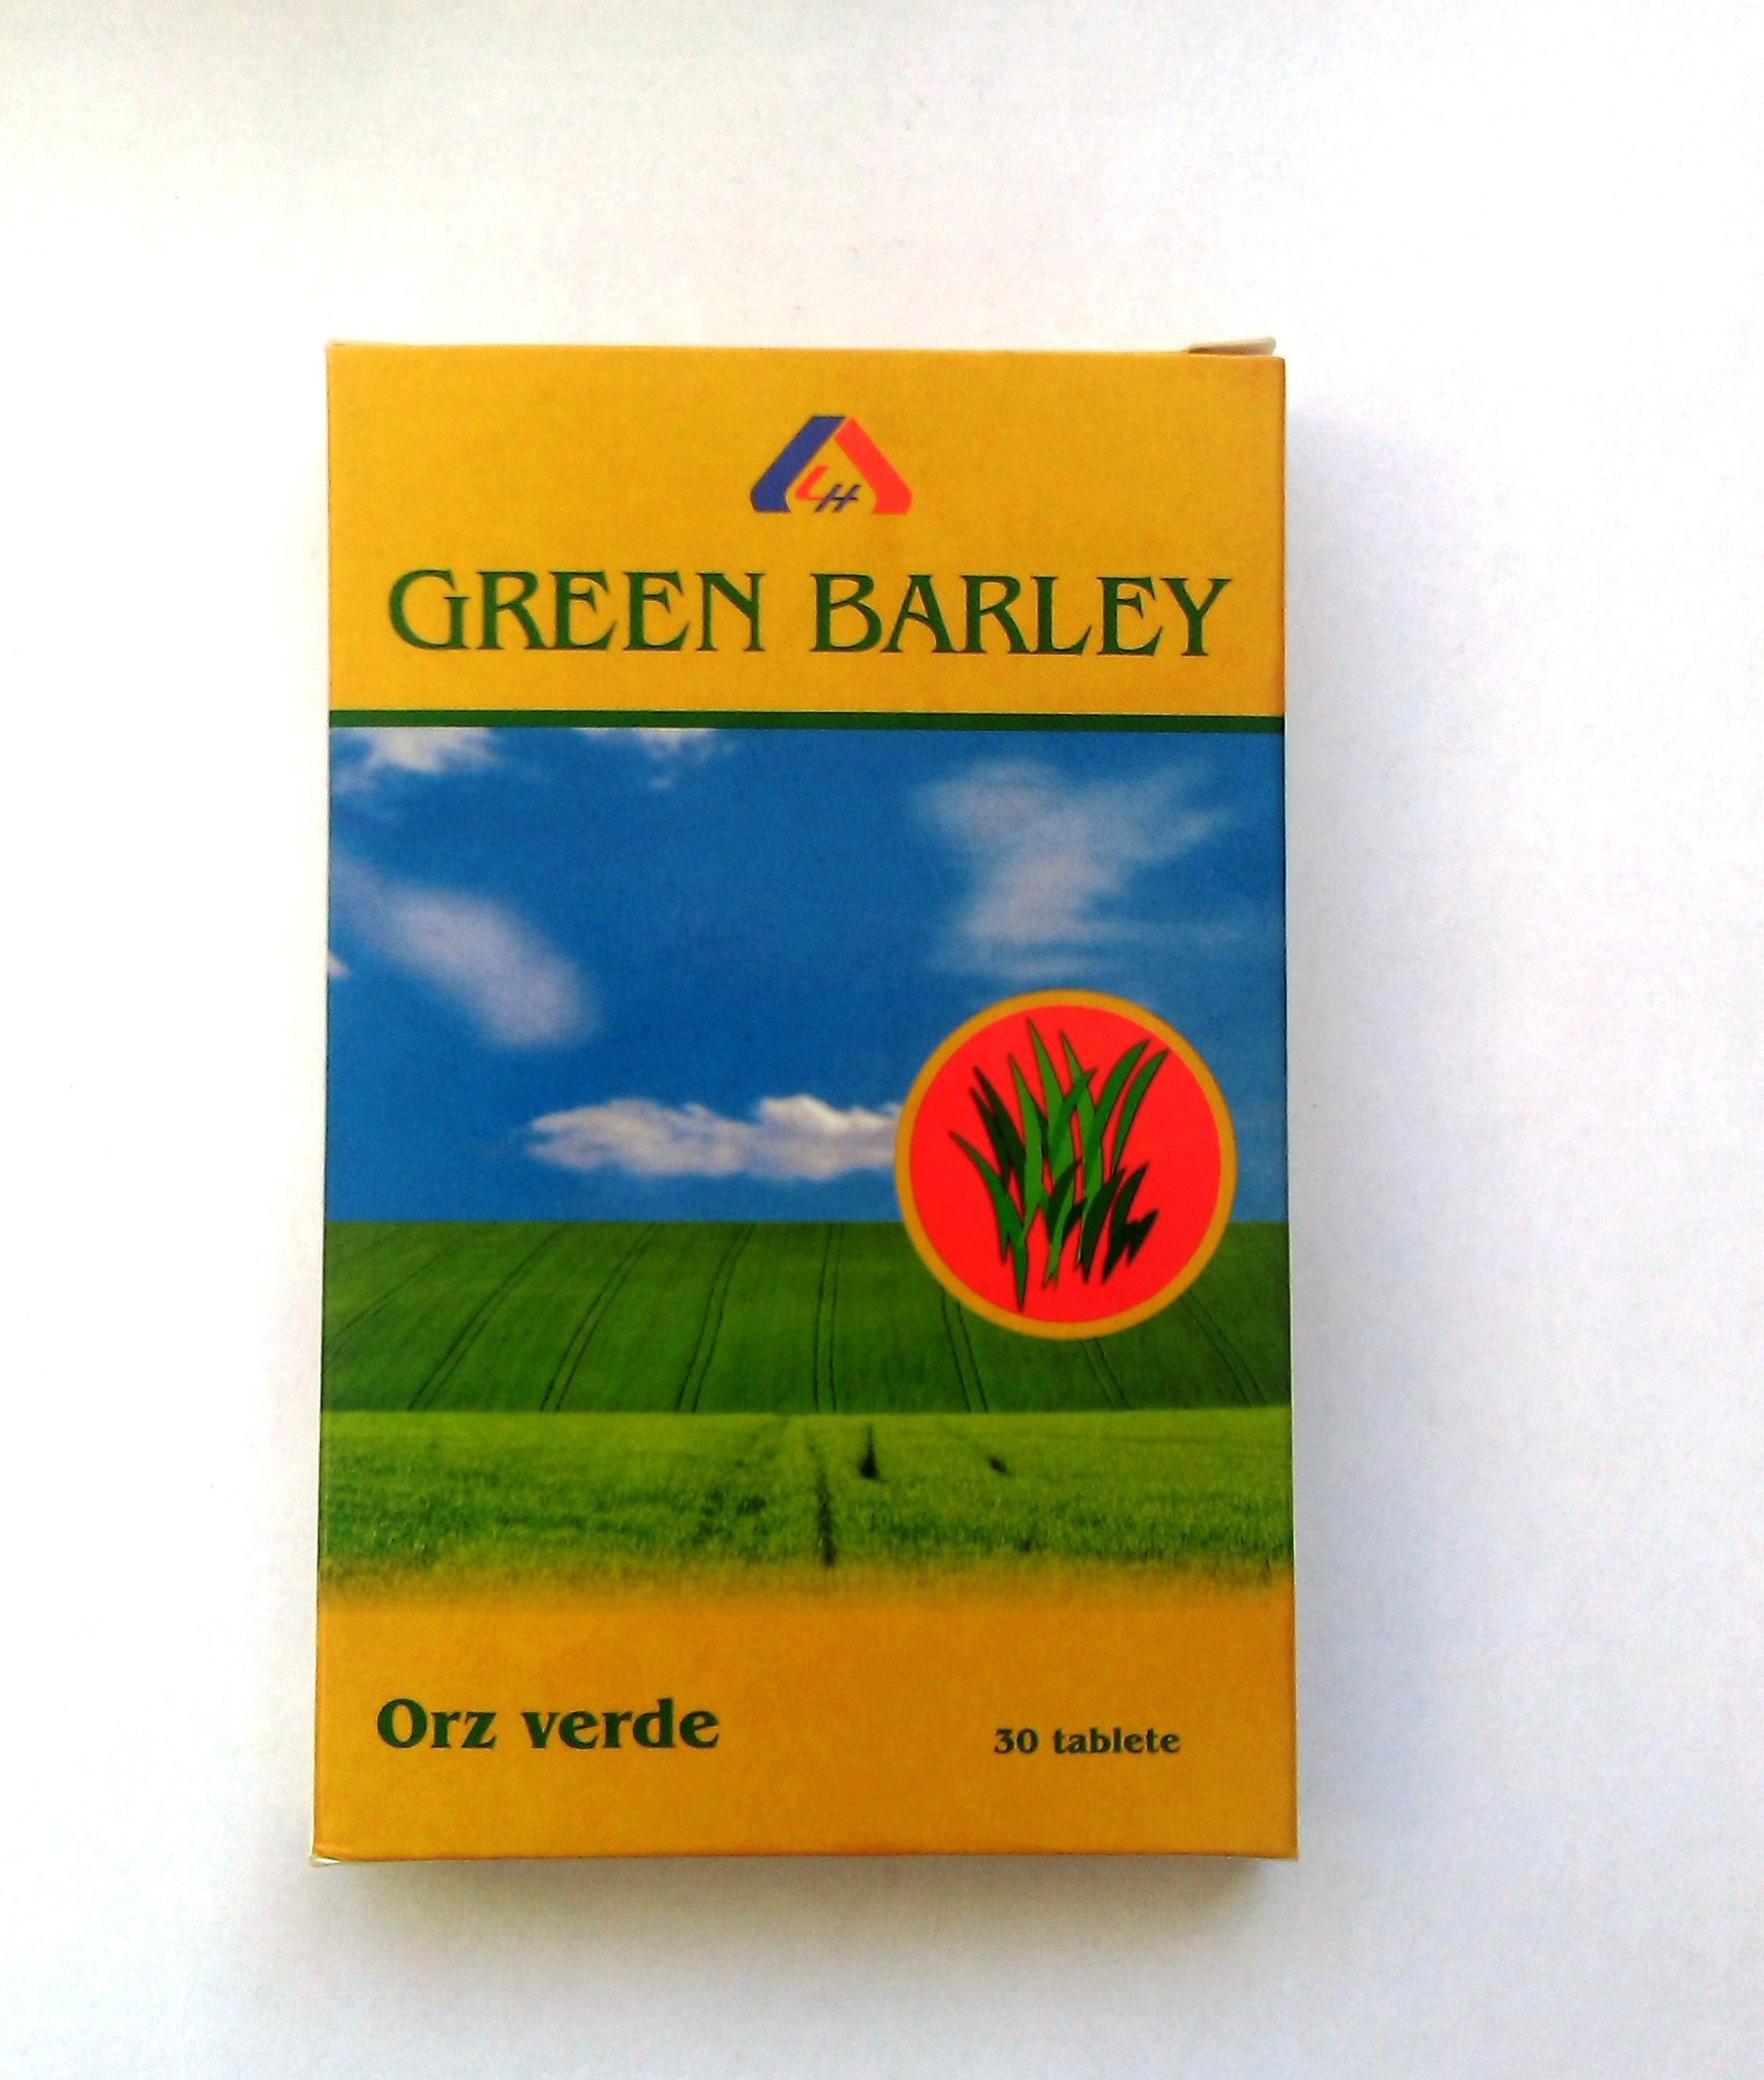 Orz verde - green barley - 800mg 30tb - american lifestyle